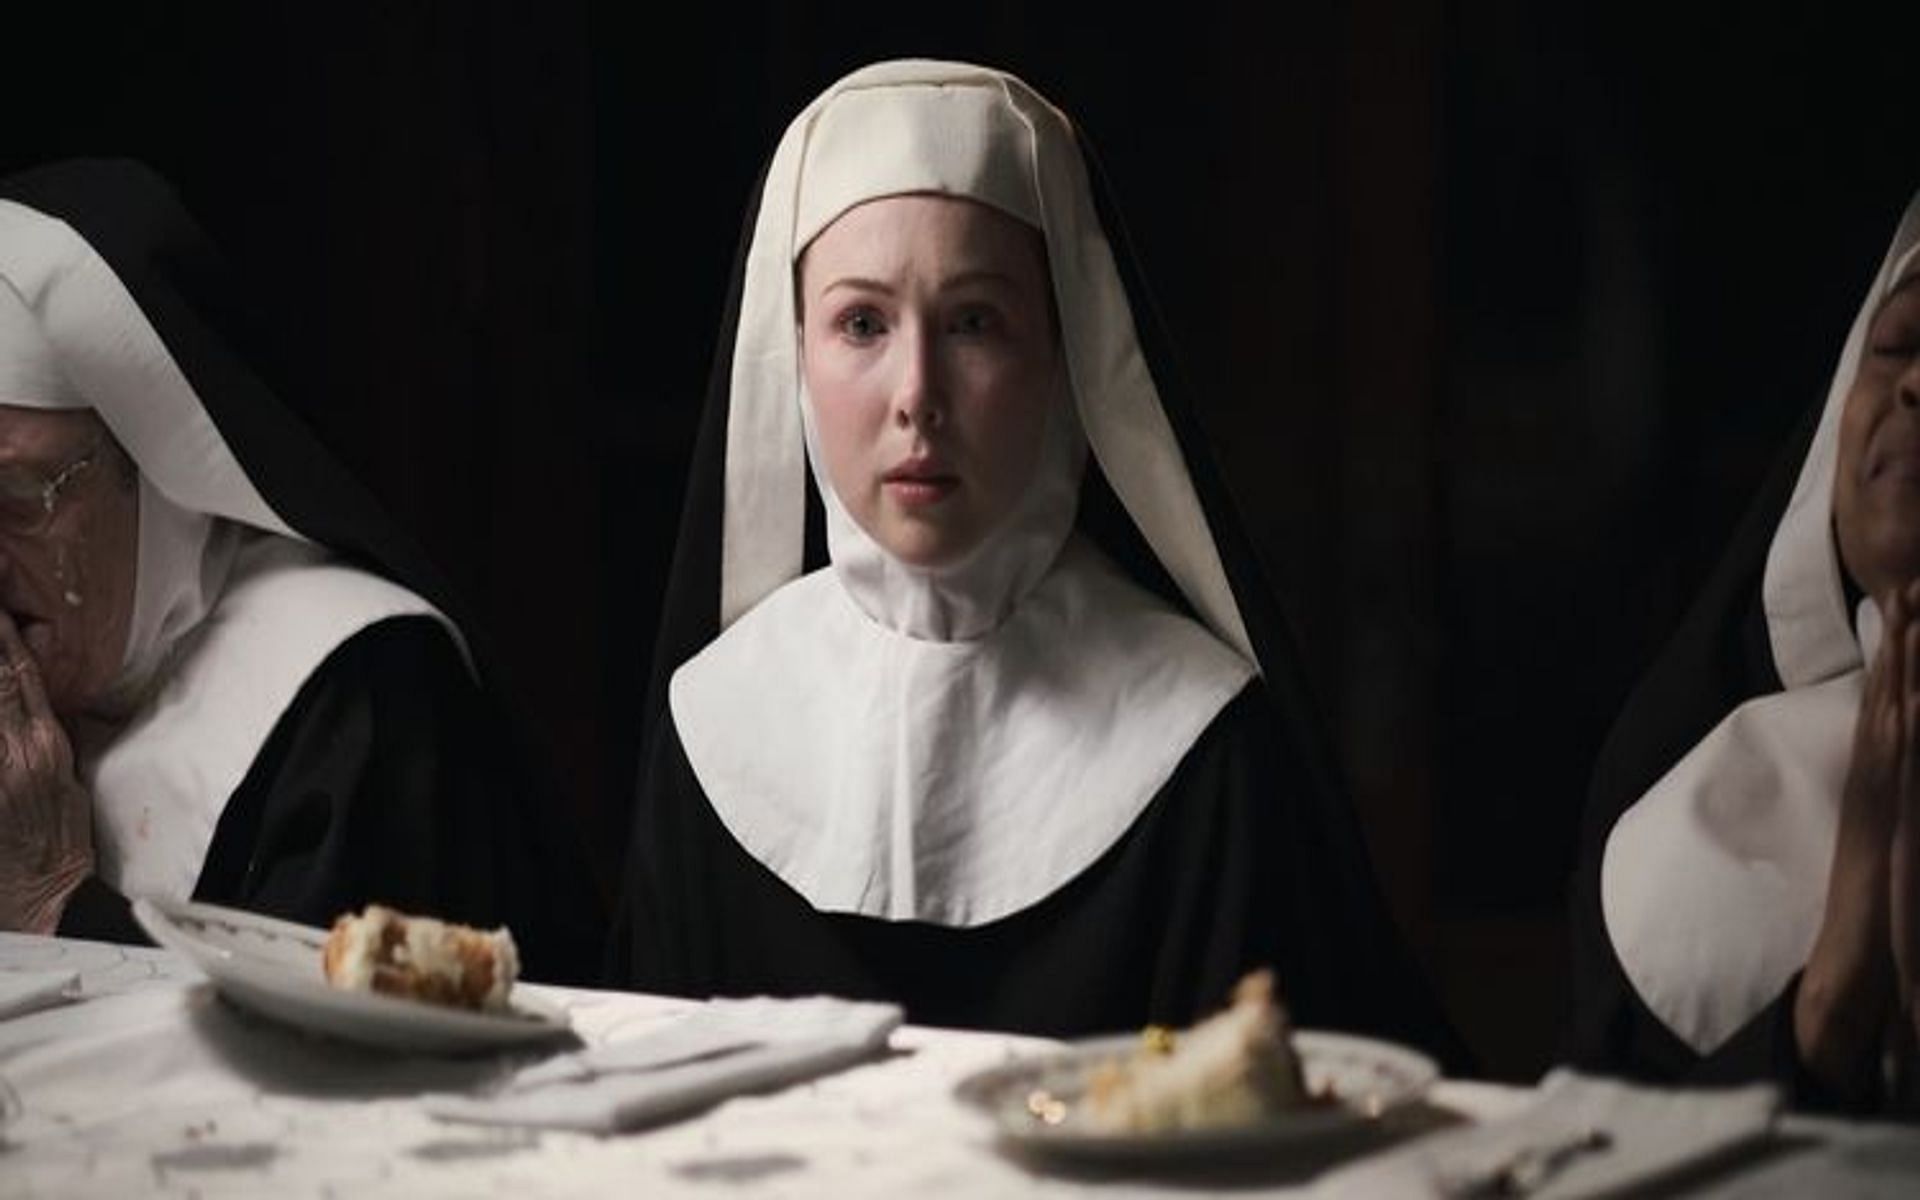 'Agnes' cast list: Molly C. Quinn, Sean Gunn and others star in nun horror